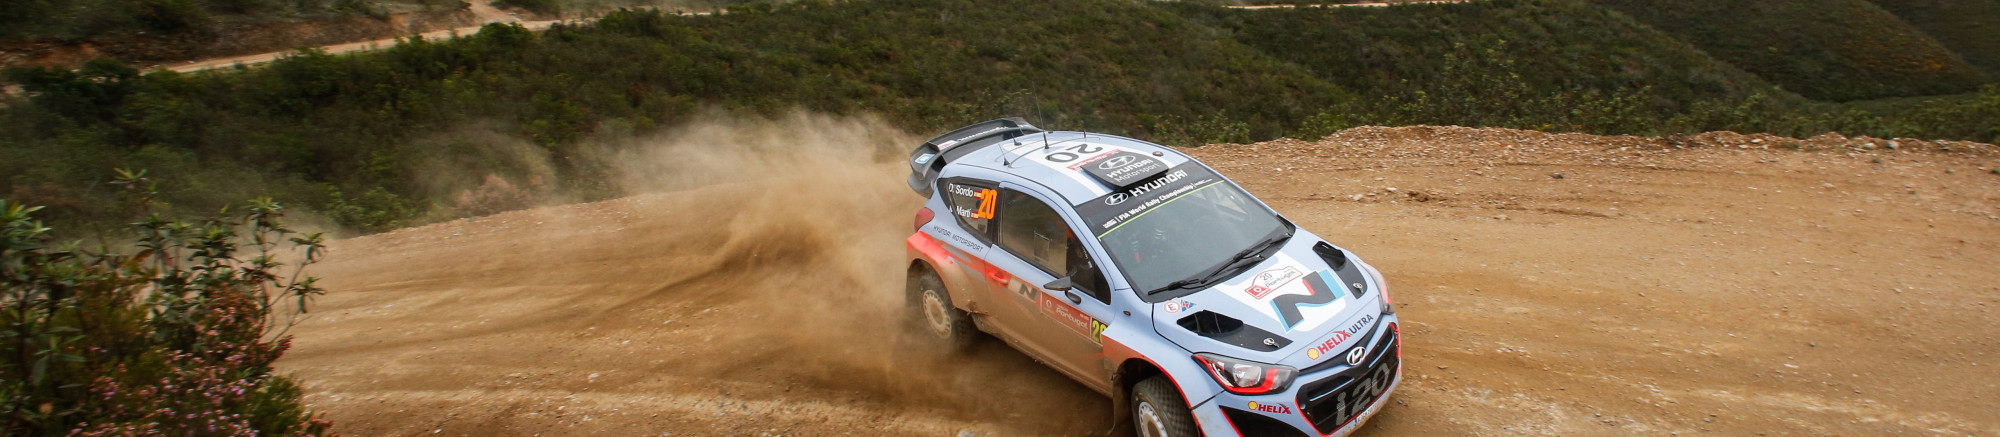 DANI SORDO / MARC MARTI / HYUNDAI I20, WRC 2014, PORTUGAL RALLY, LISBONNE (POR) 